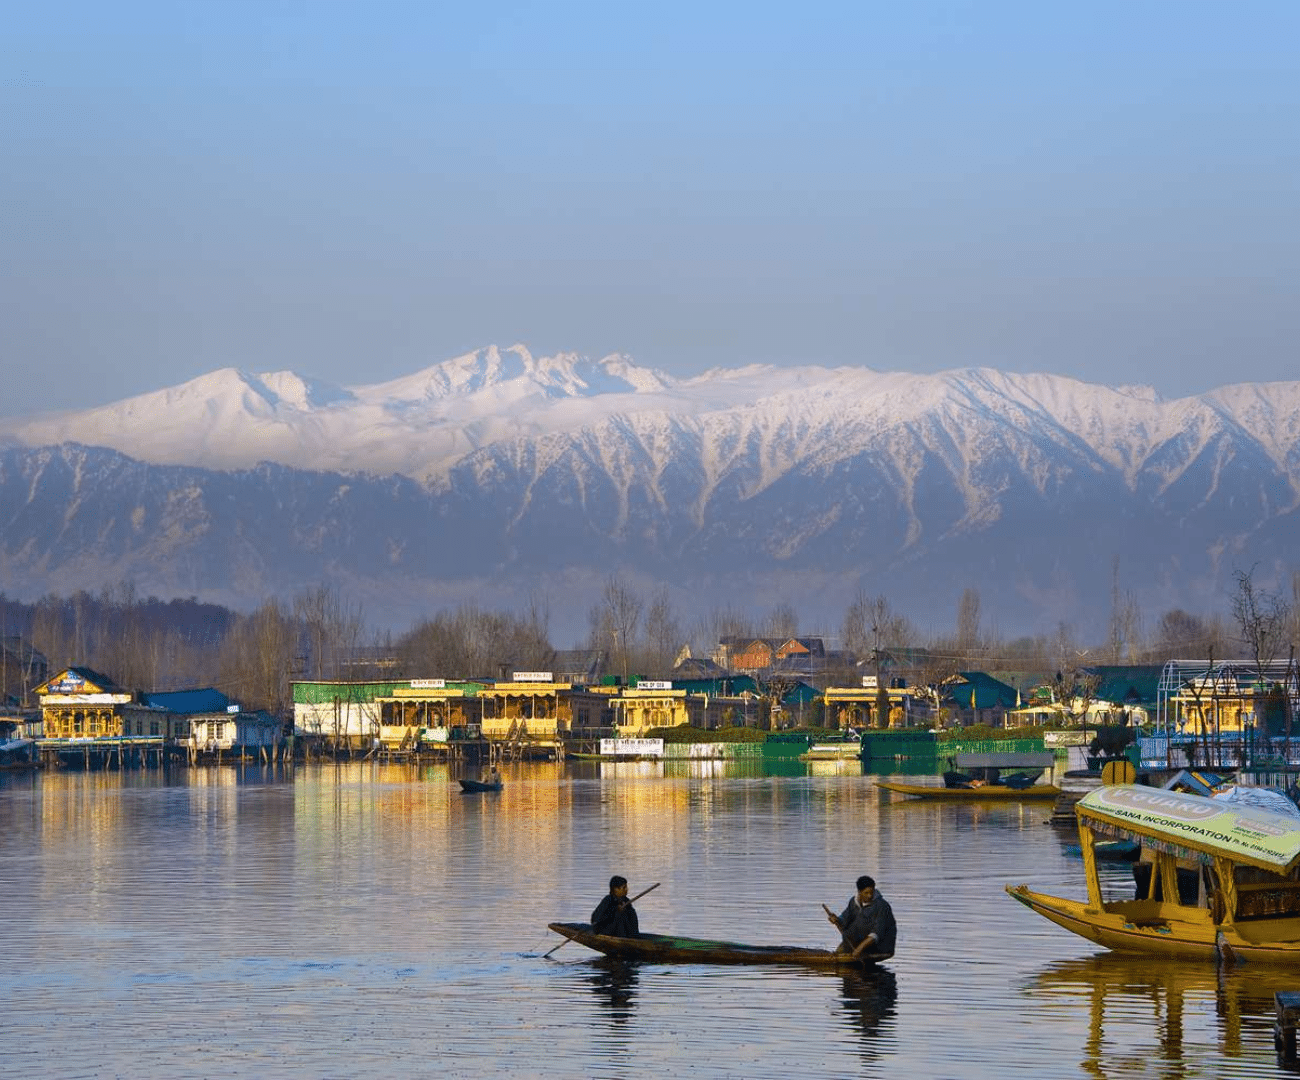 Srinagar included in Kashmir tour package